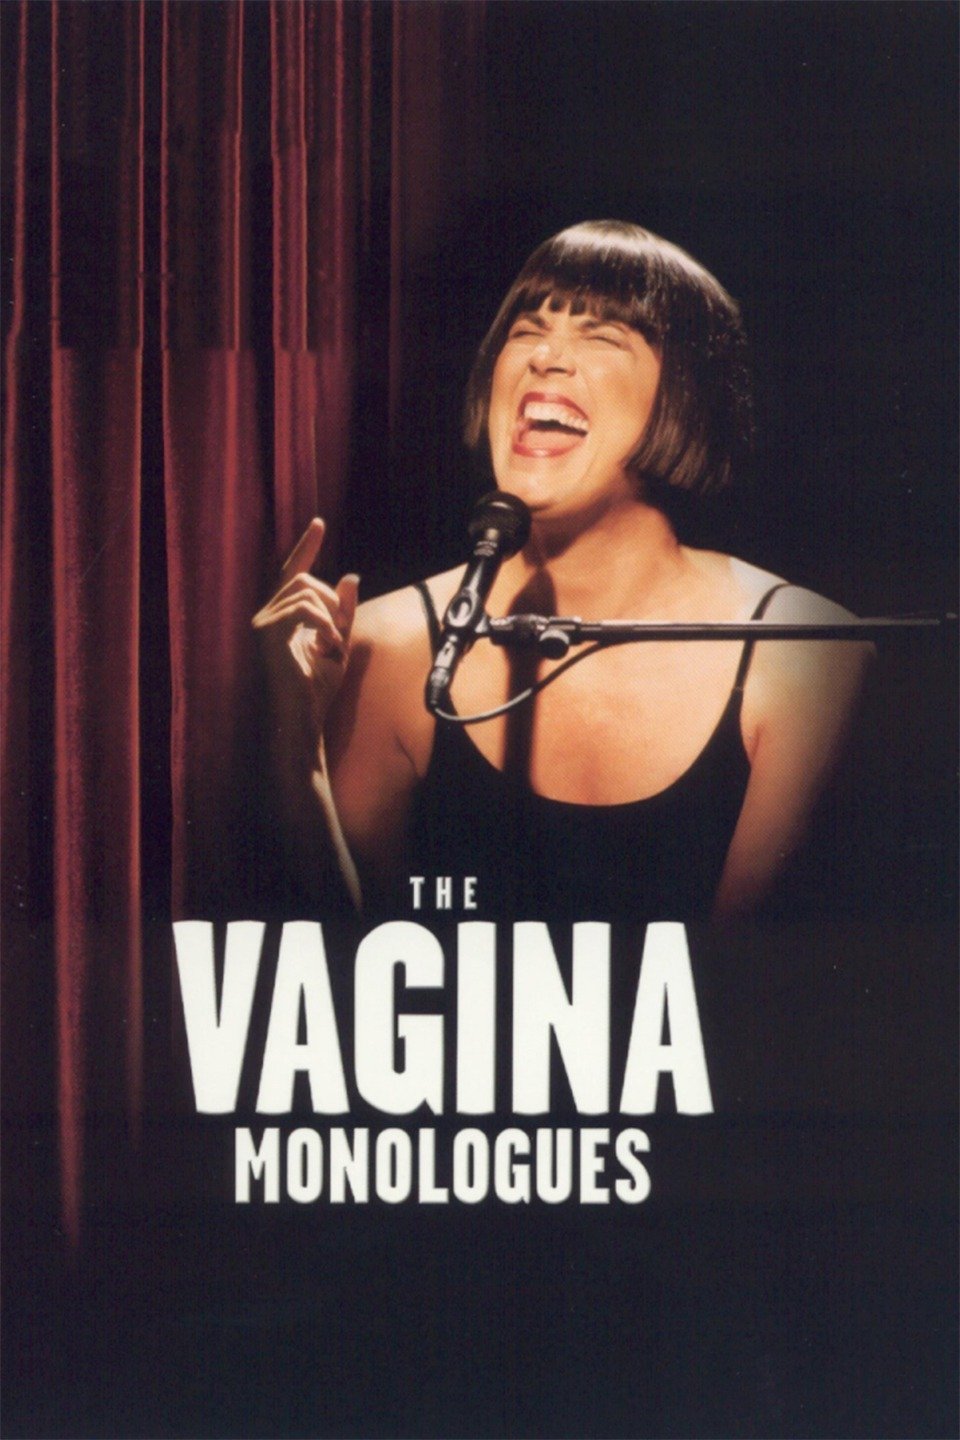 vagina monologues dates neibar wife sex Fucking Pics Hq